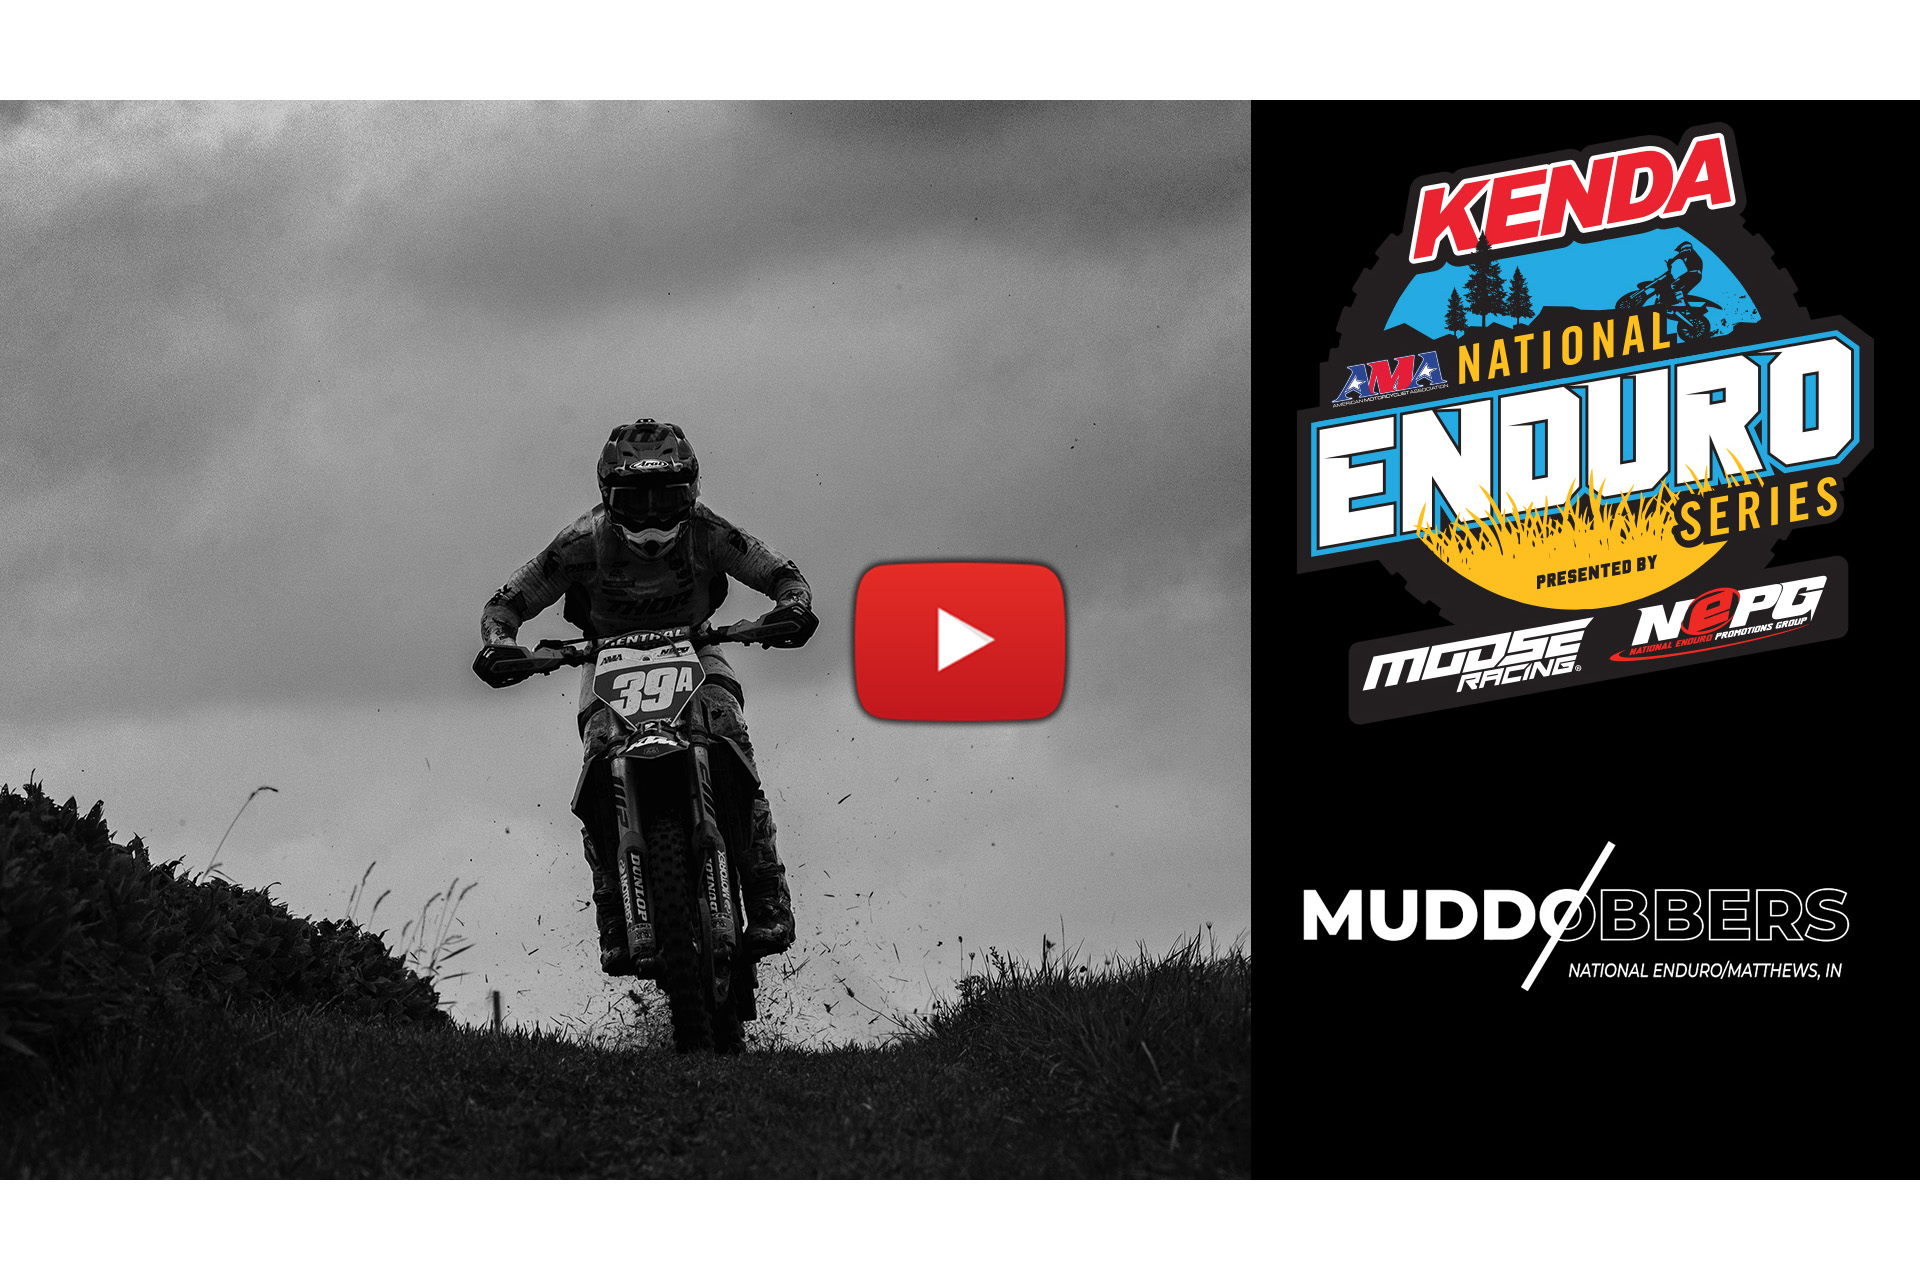 AMA National Enduro: Muddobbers Rnd7 video highlights